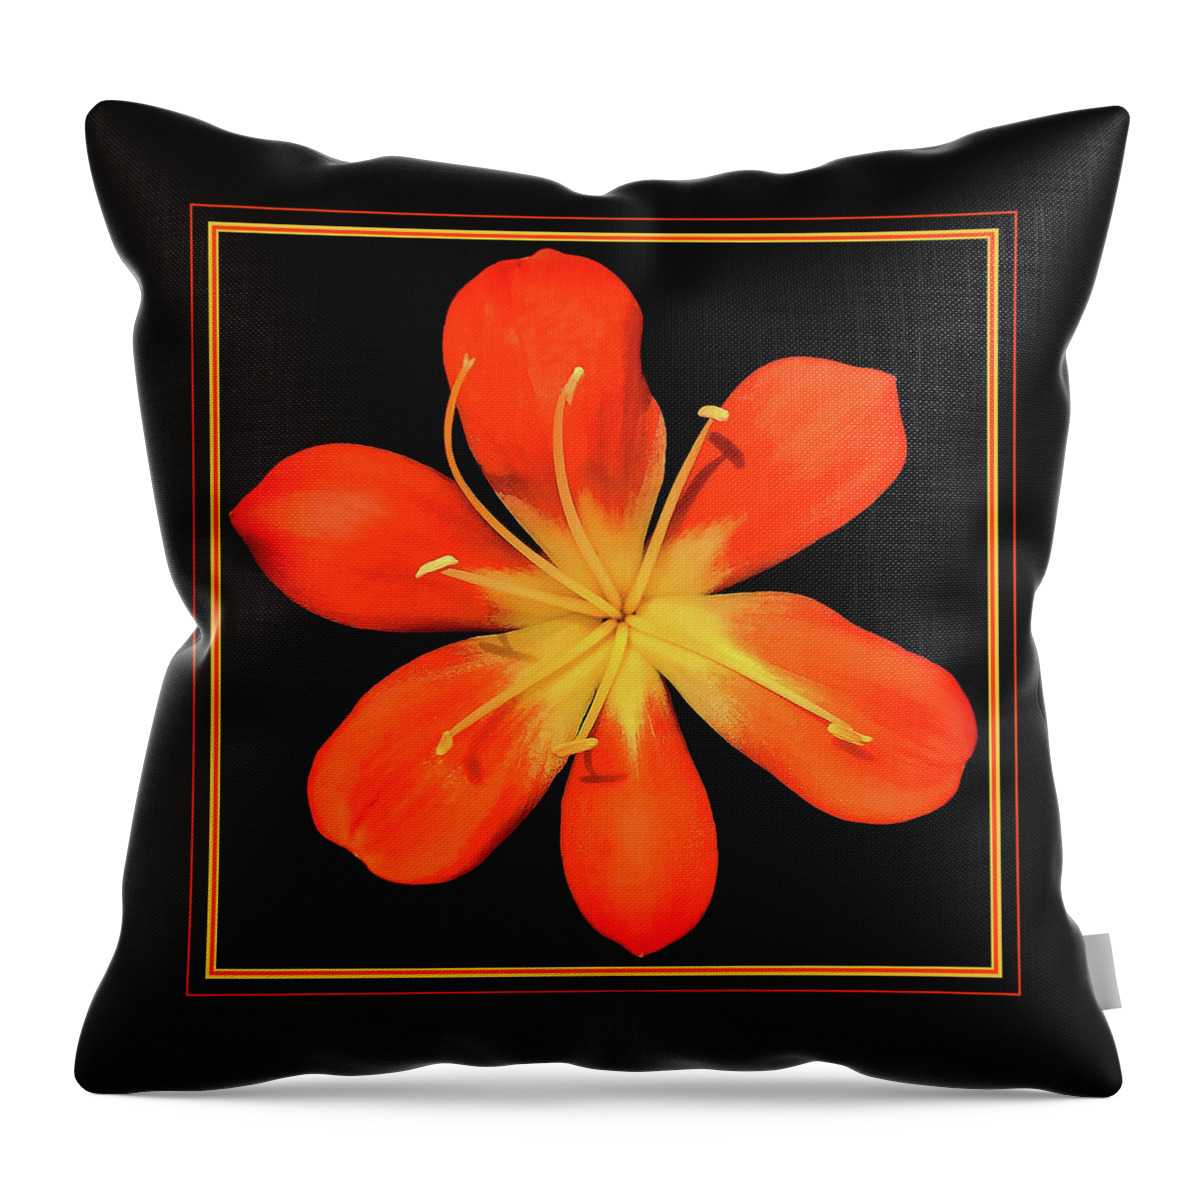 Clivia Flower Throw Pillow featuring the digital art Clivia Flower by Susan Maxwell Schmidt